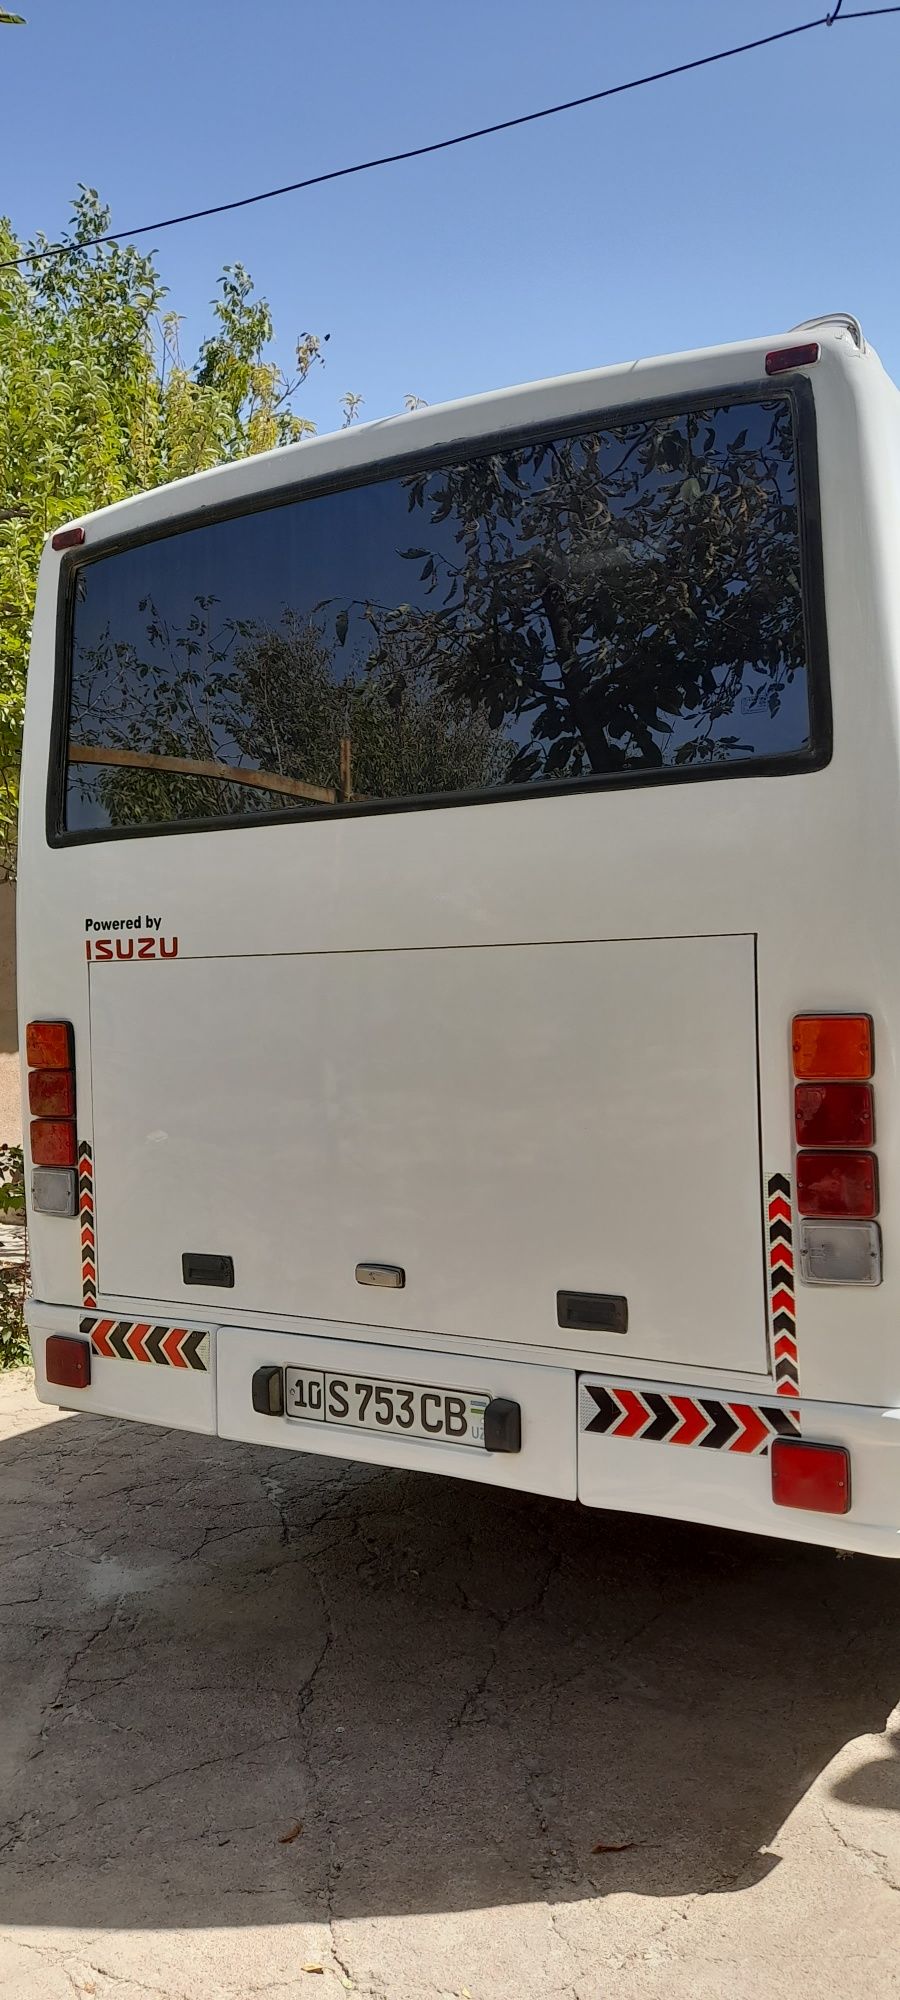 Продается Автобус Исузи  мр37  2012 года  на Метане